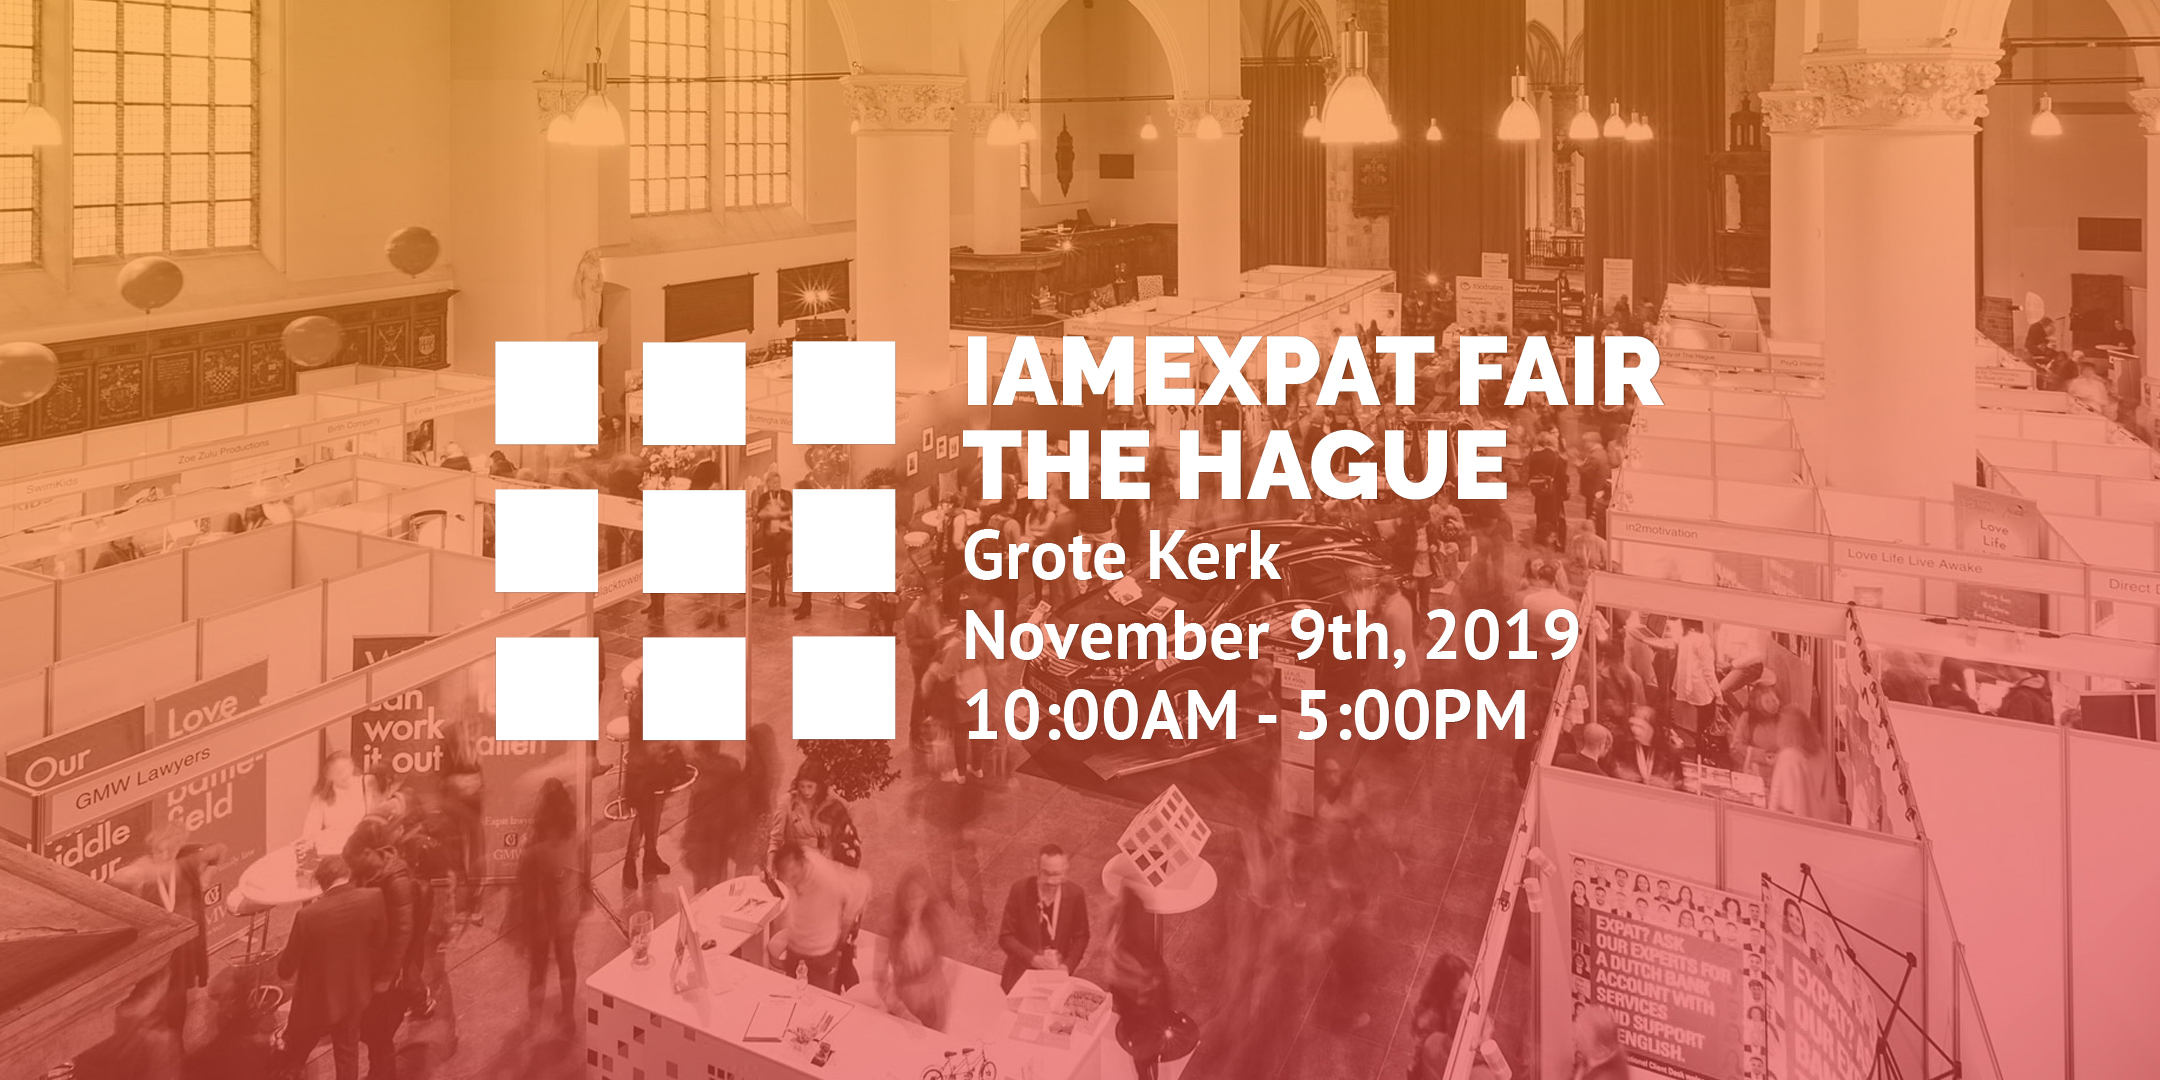 Visit UvA Talen at the IamExpat Fair in The Hague